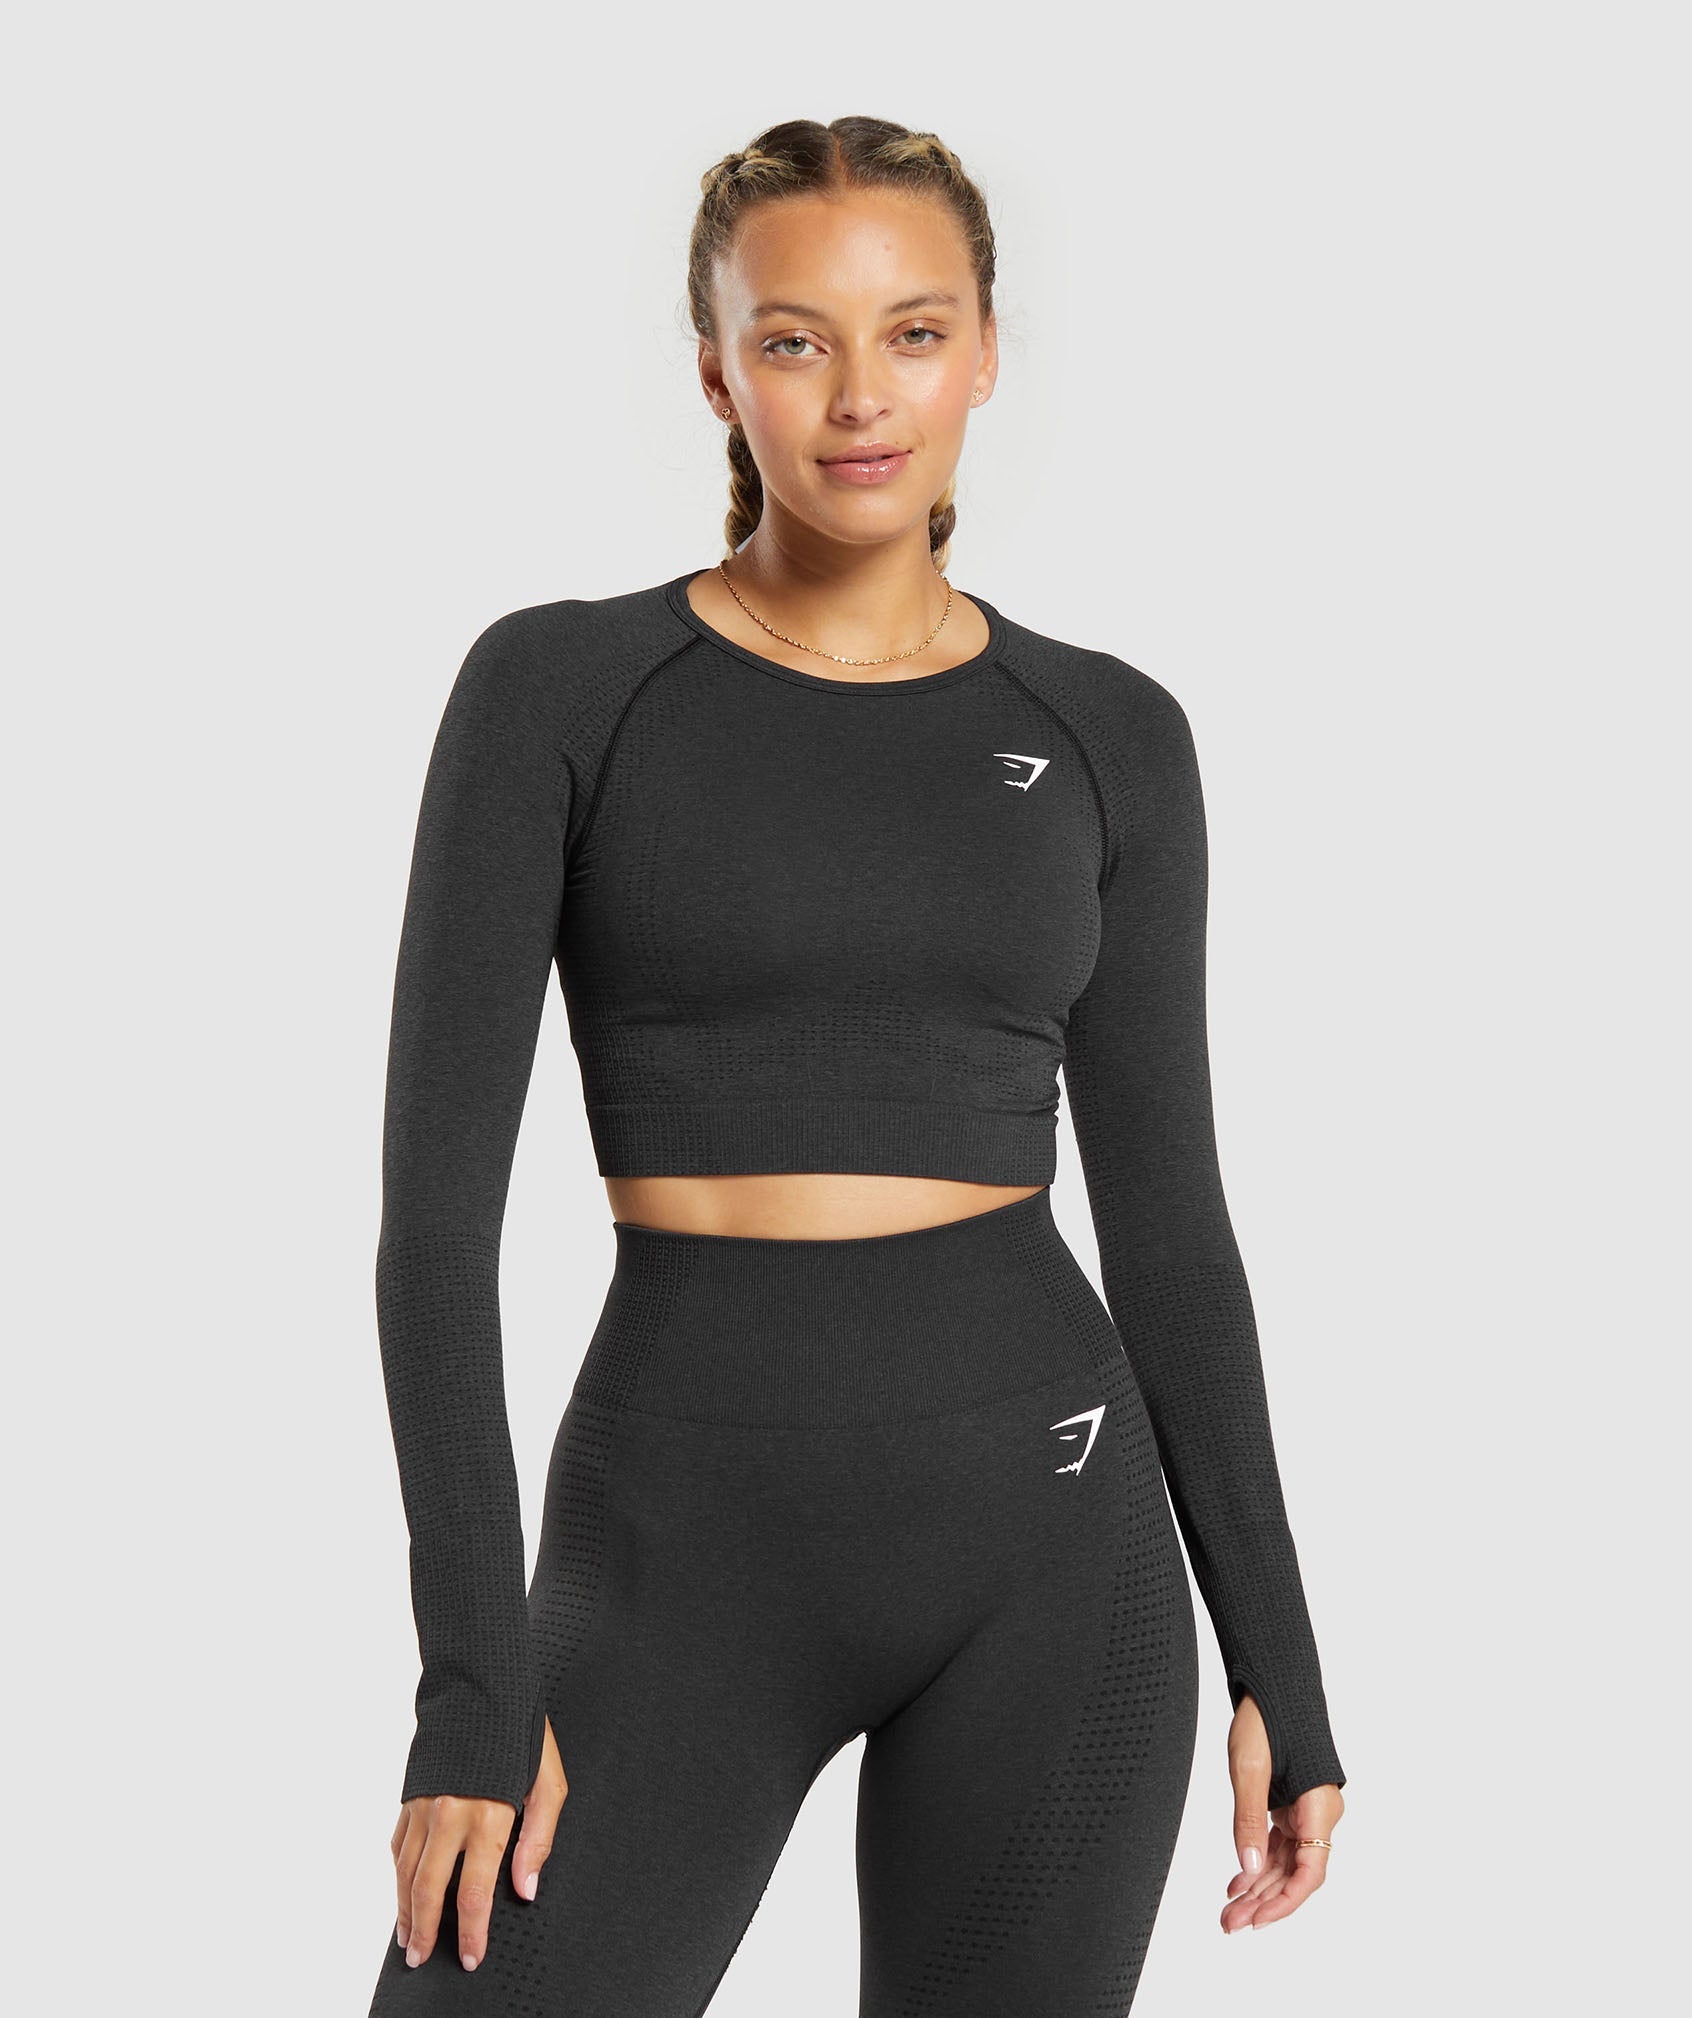 Women Warm Long Sleeve Gym Yoga Top Shirt Winter Zipper Sports Top